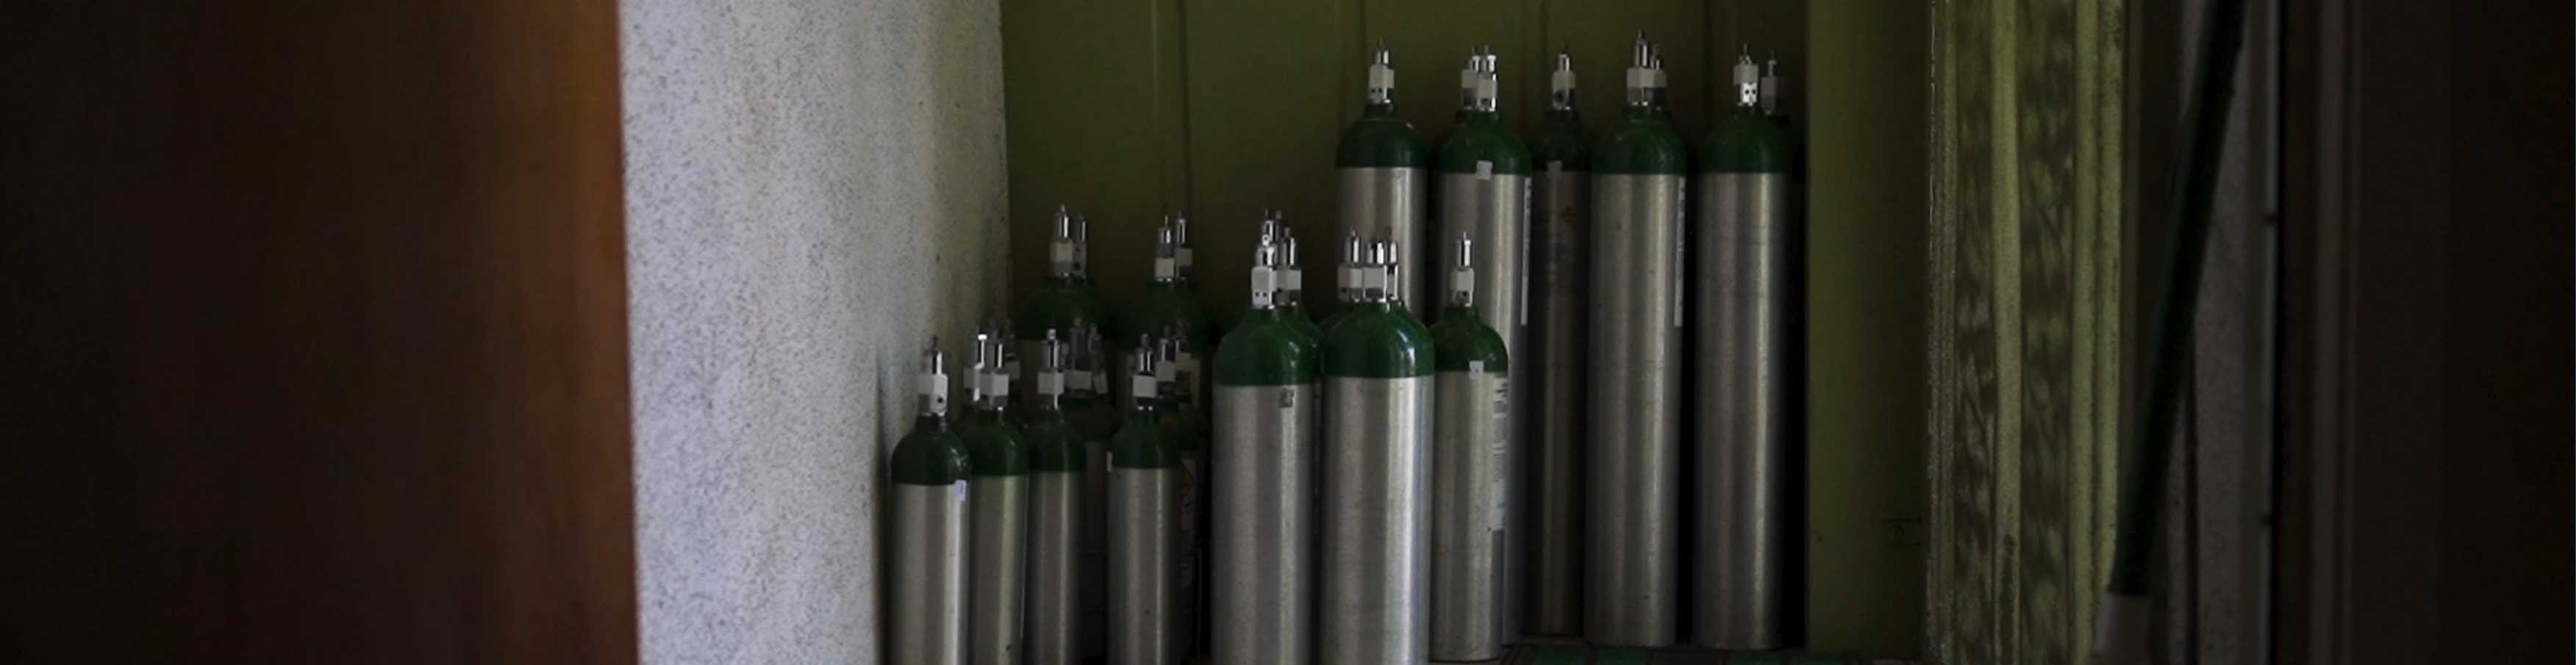 oxygen-tanks